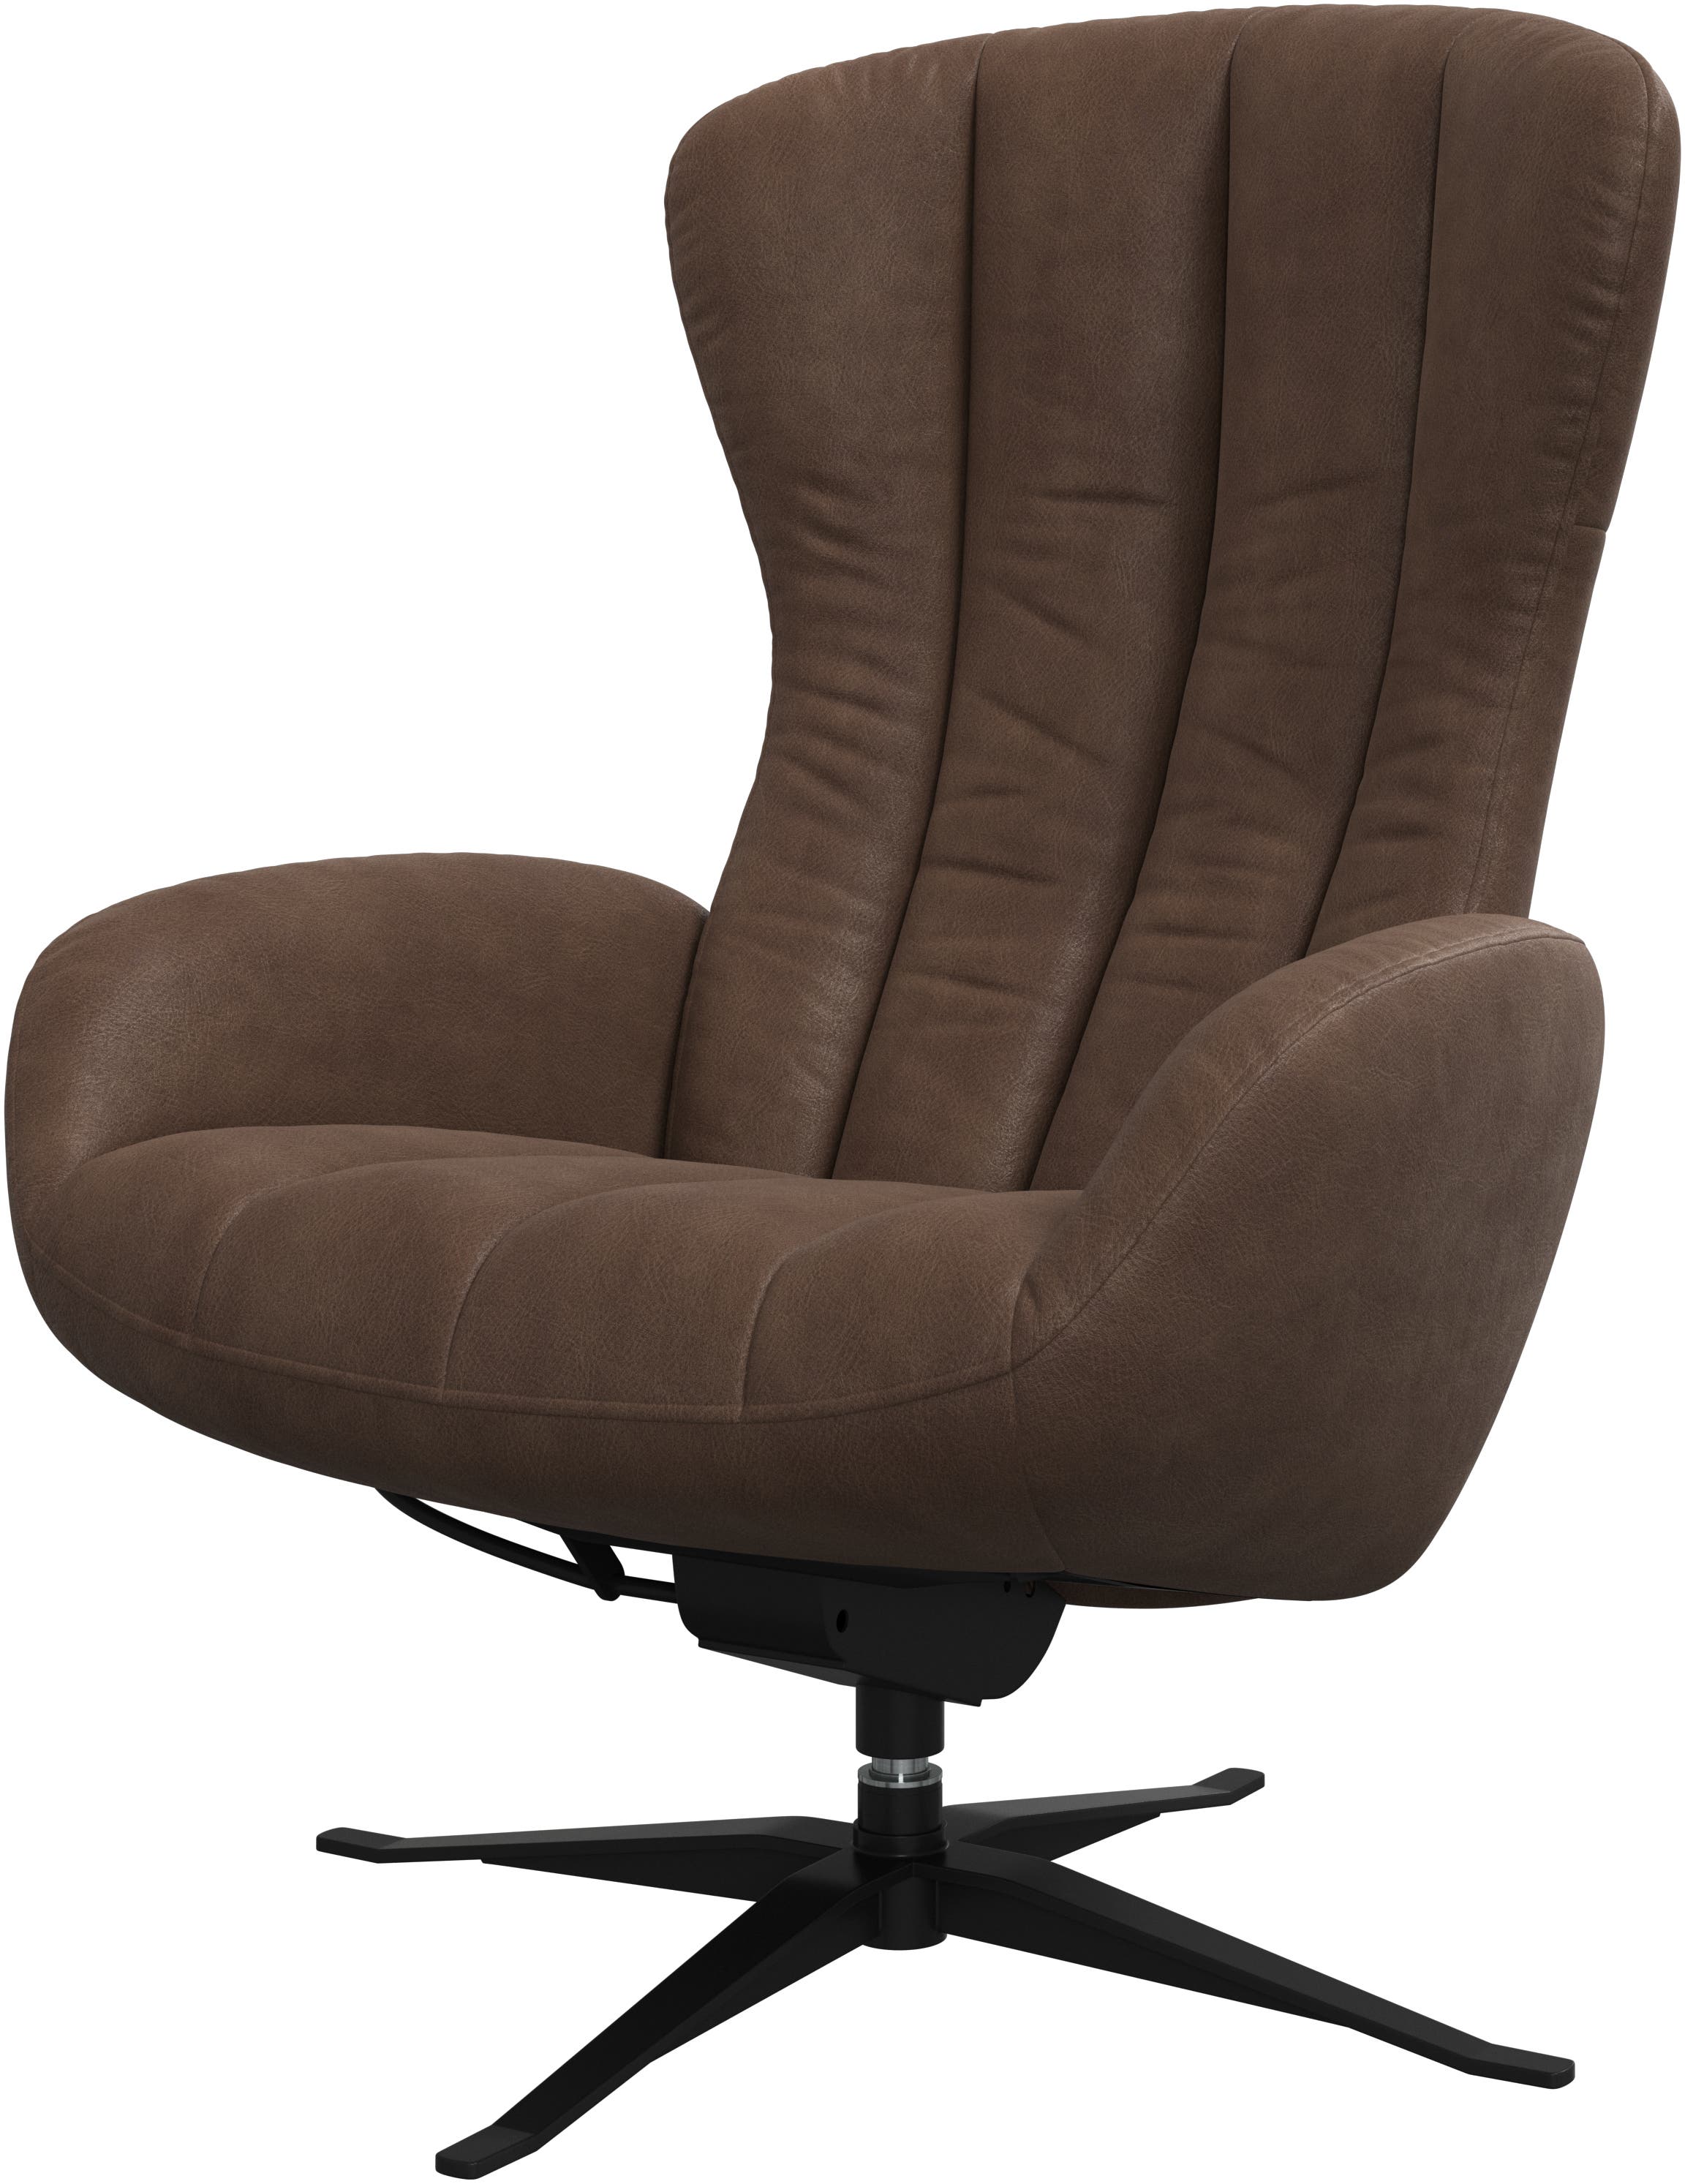 Tilburg living chair with tilt, swivel and adjustable headrest